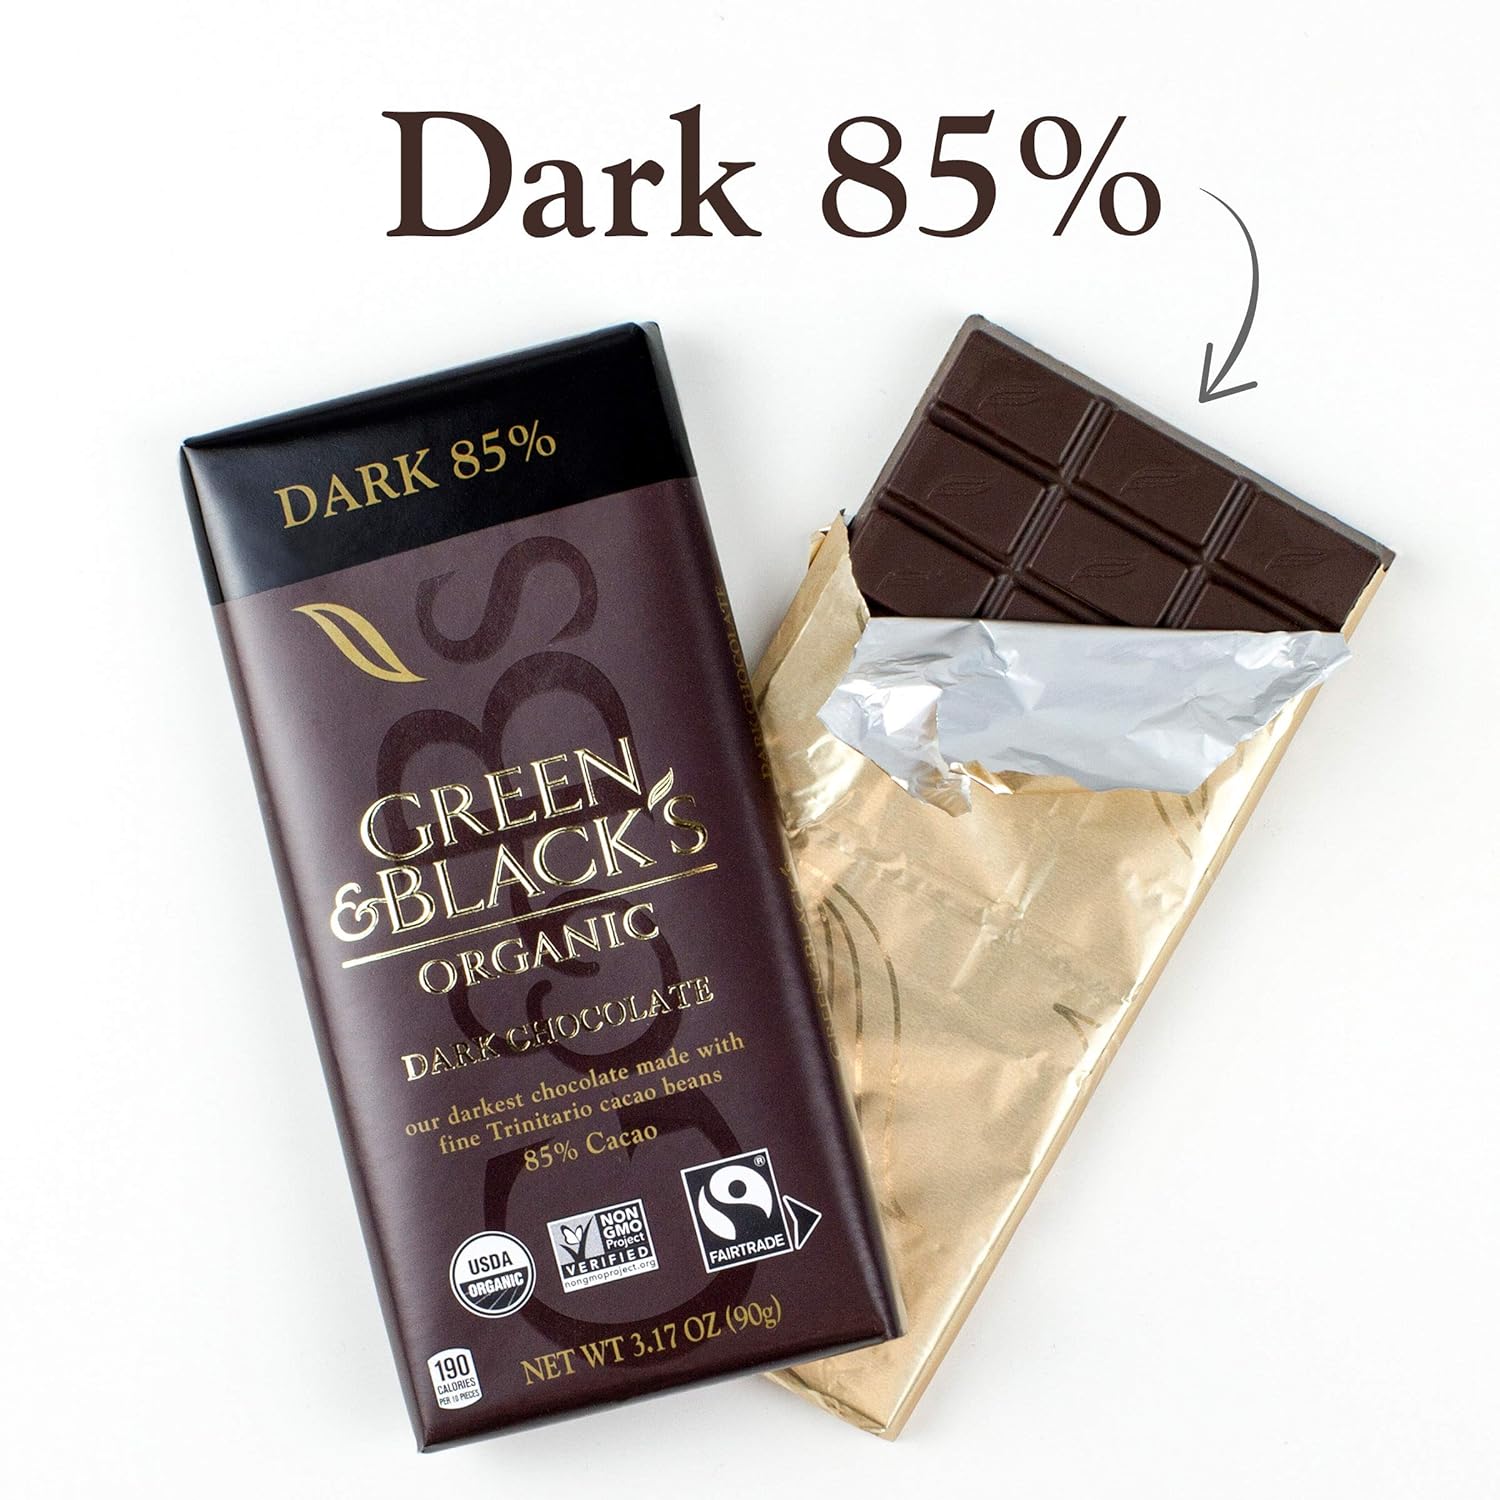  Green & Blacks Organic Dark Chocolate Bar, 85% Cacao, Easter Chocolate, 10 - 3.17 oz Bars